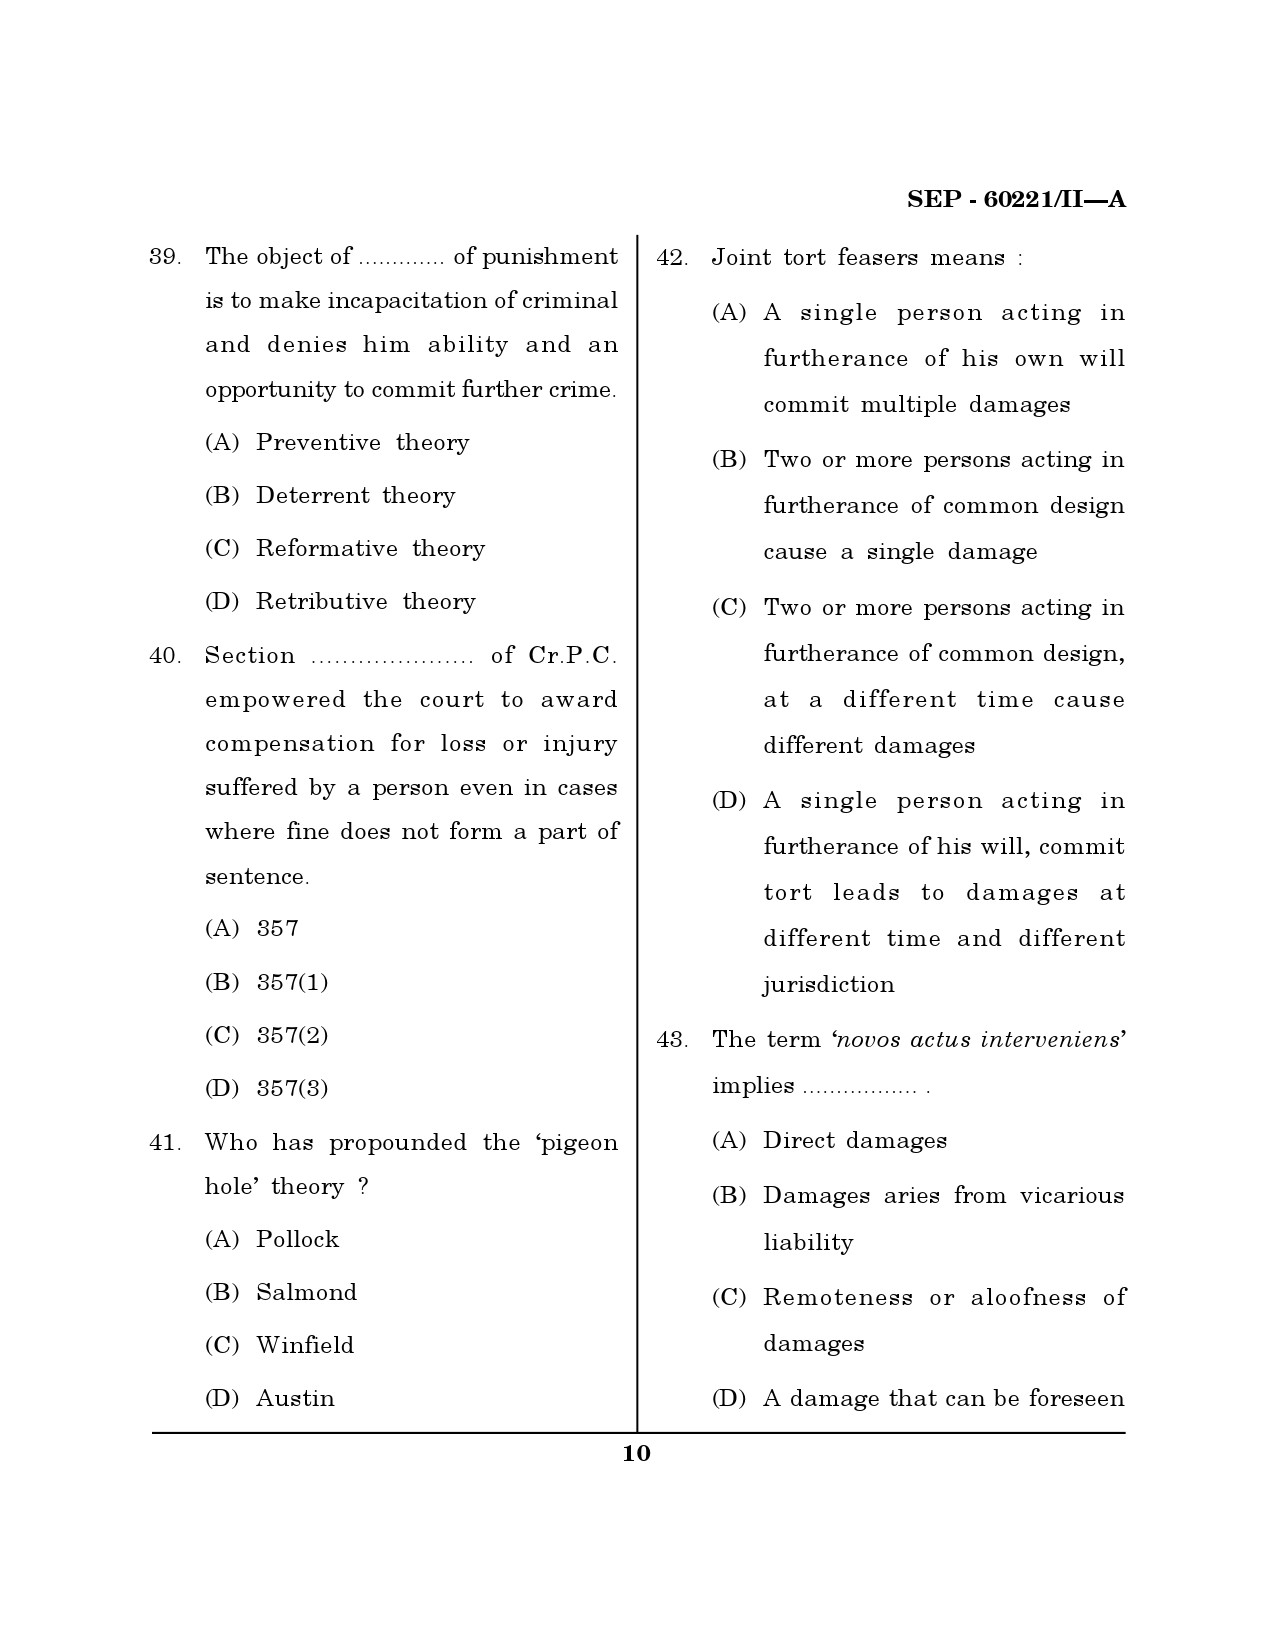 Maharashtra SET Law Exam Question Paper September 2021 9